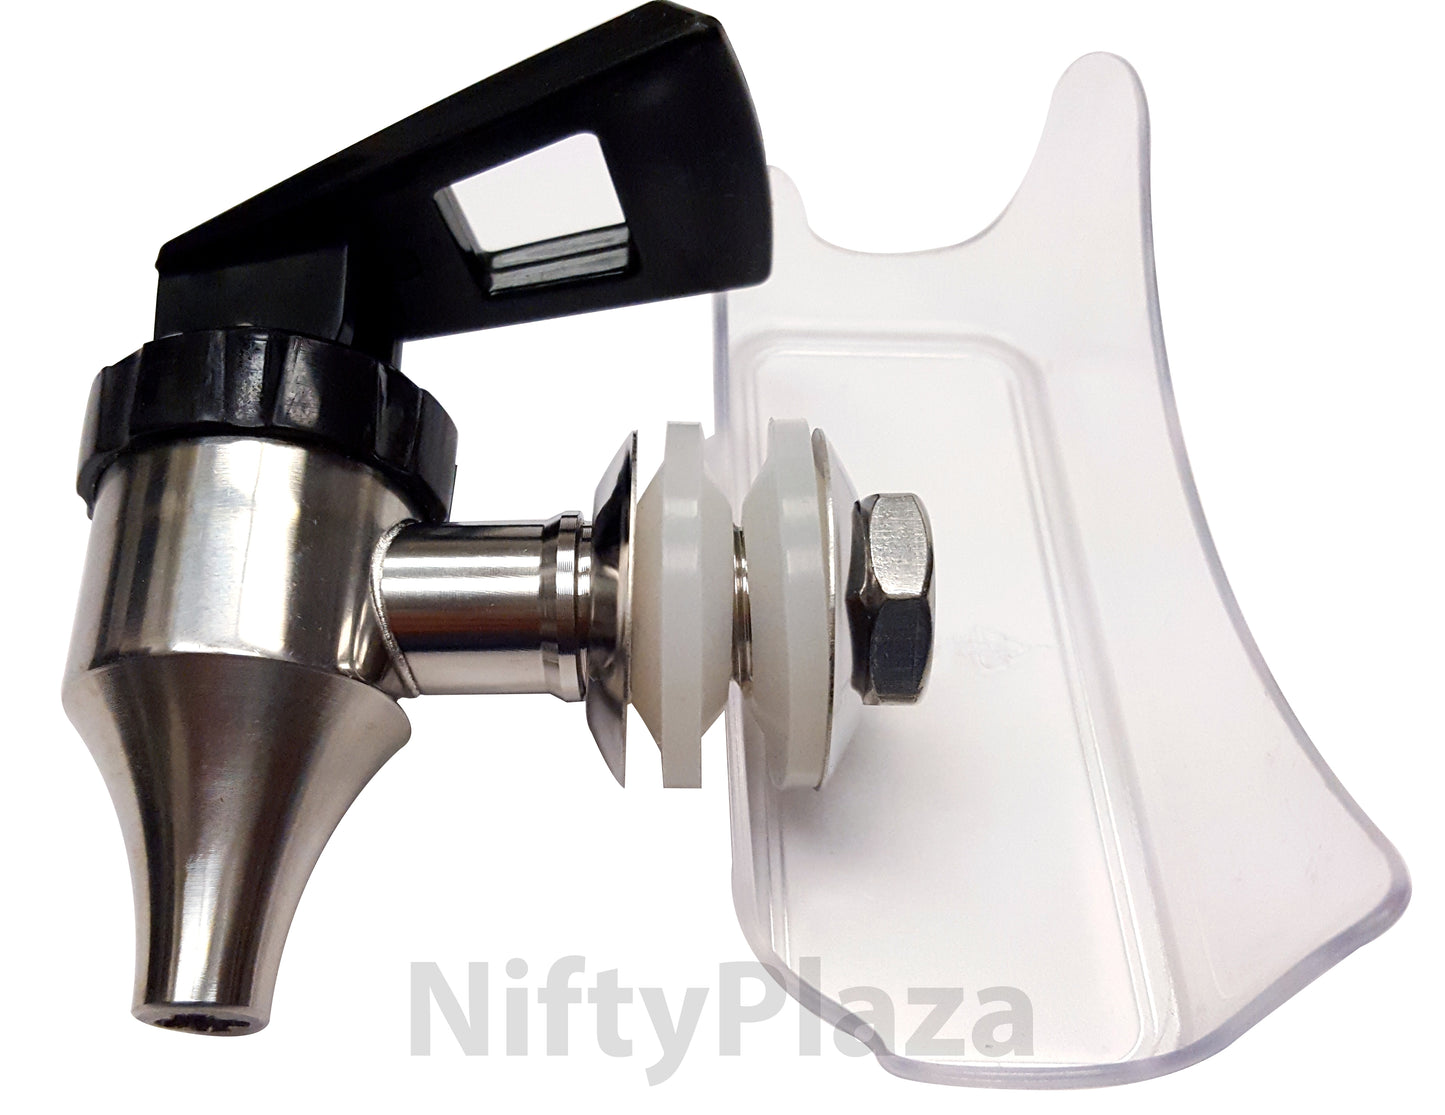 NiftyPlaza Beverage Dispenser Spigot Faucet - Stainless Steel – Premium 16mm Spring Loaded